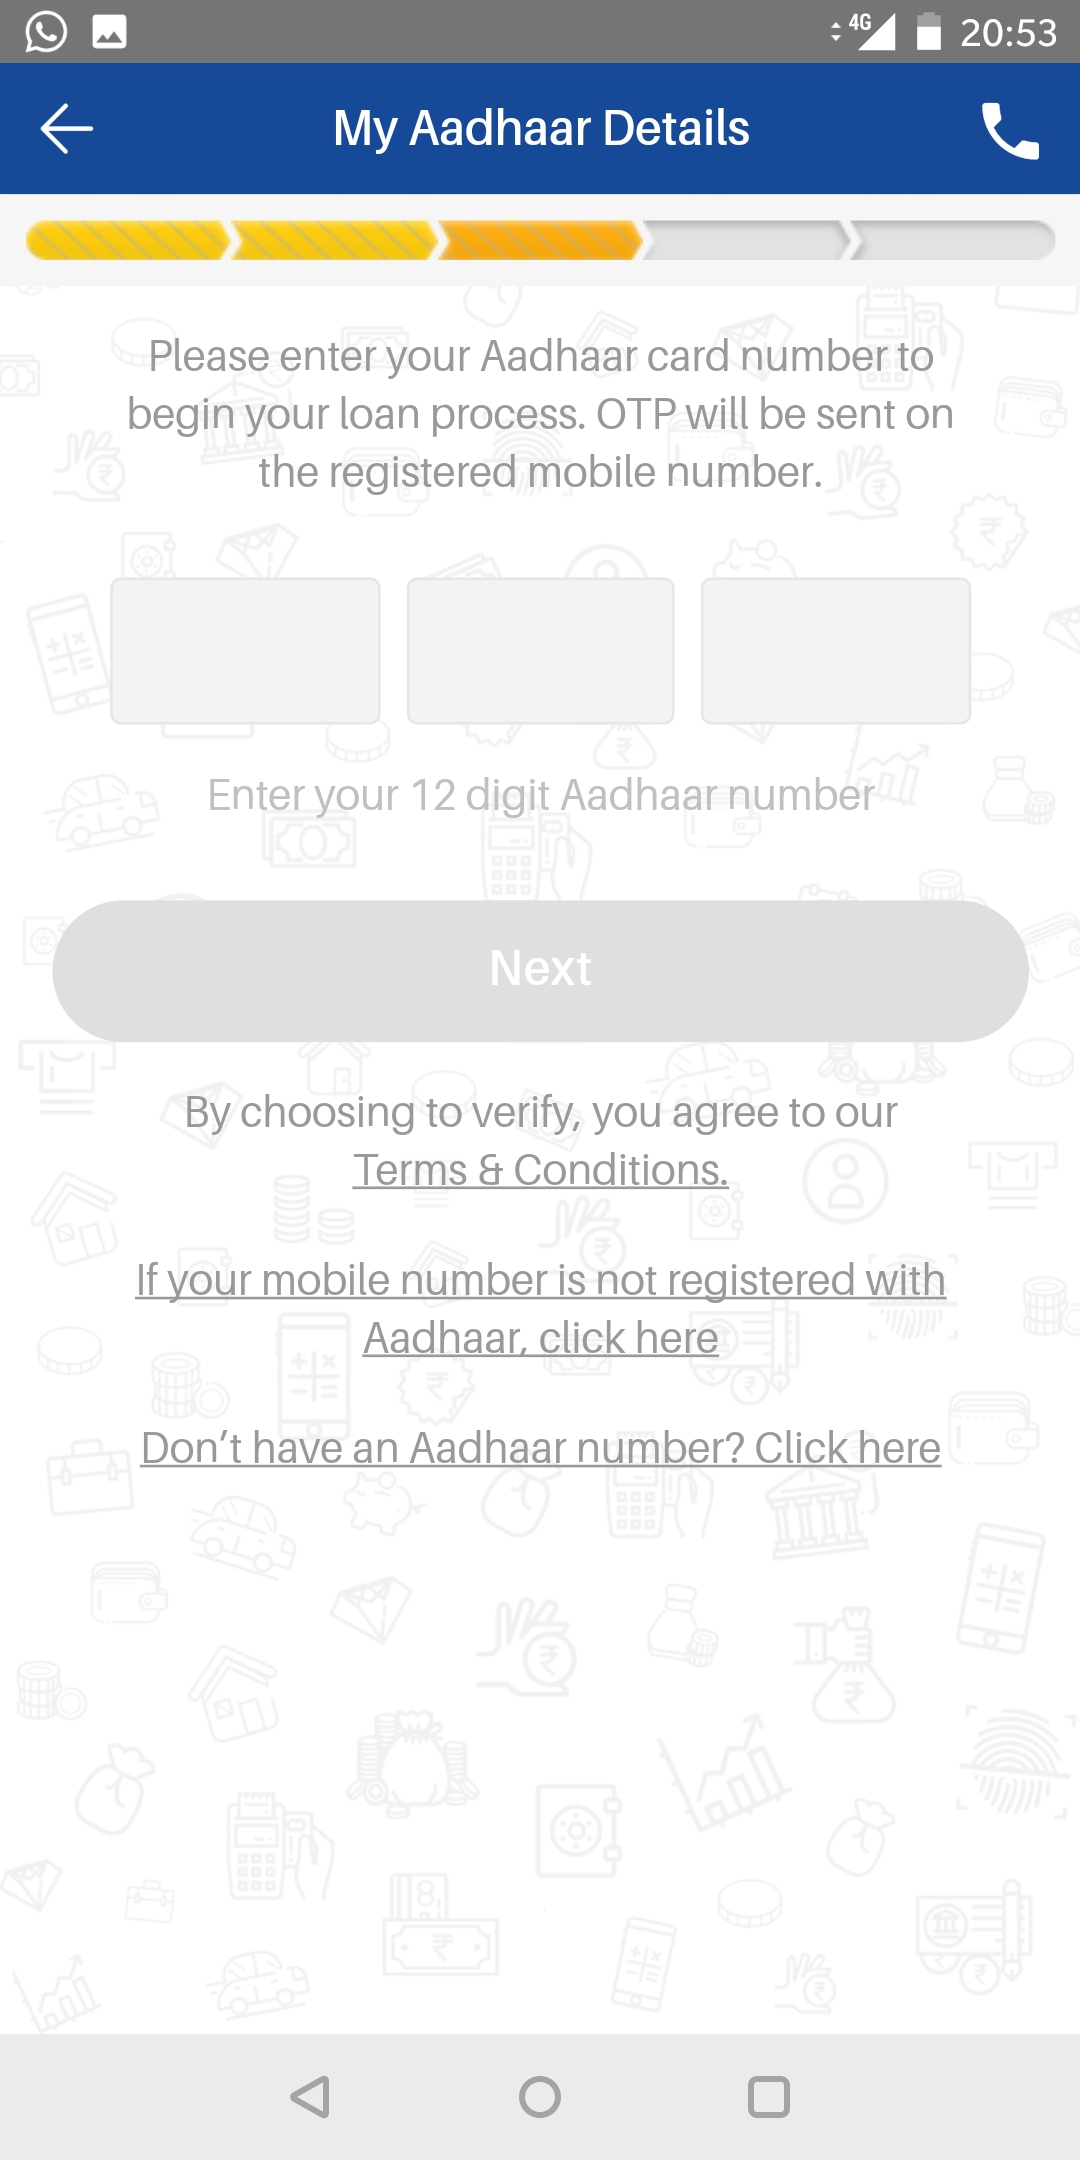 indiabulls dhani app 